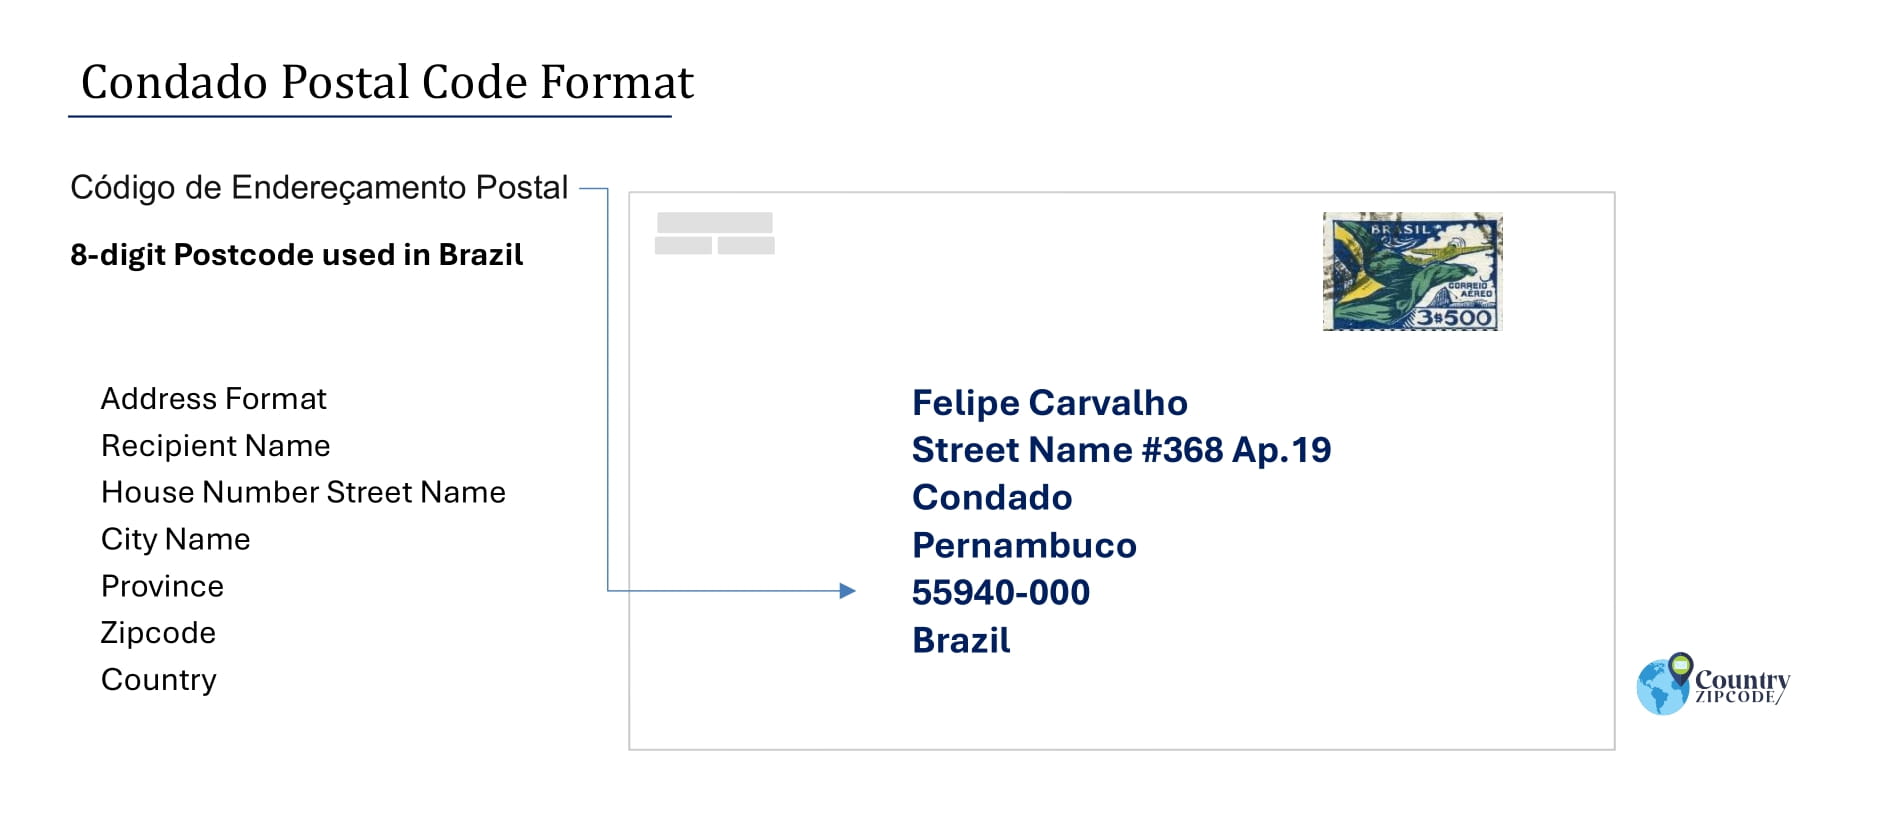 Example of Codigo de Enderecamento Postal and Address format of Condado Pernambuco Brazil